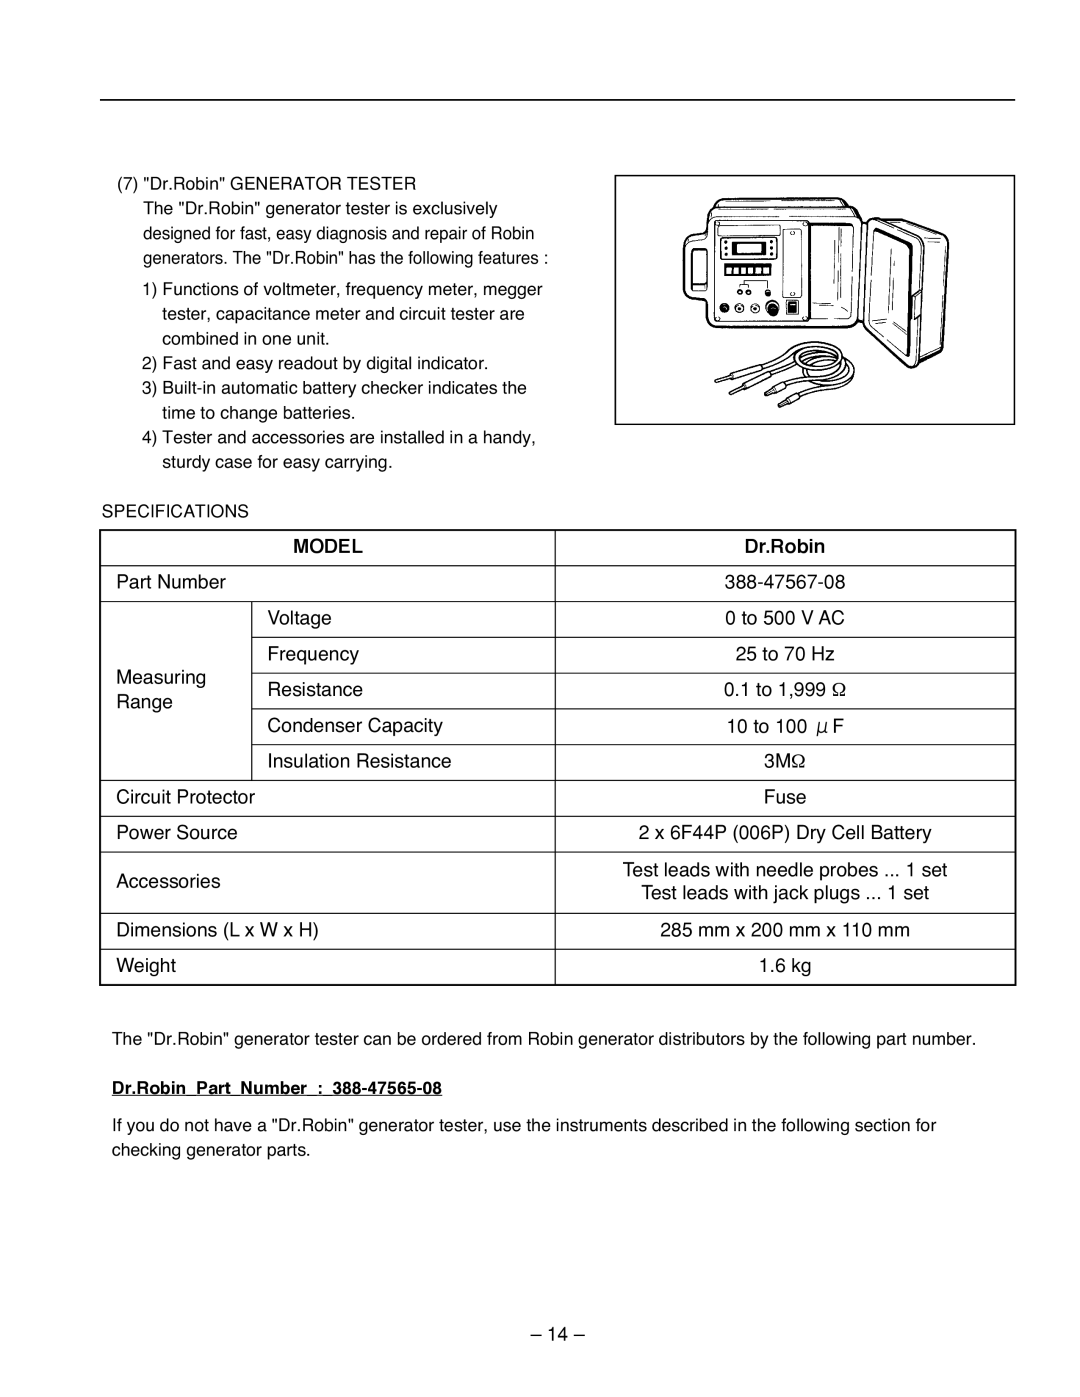 Subaru R1100 service manual Model, Dr.Robin 